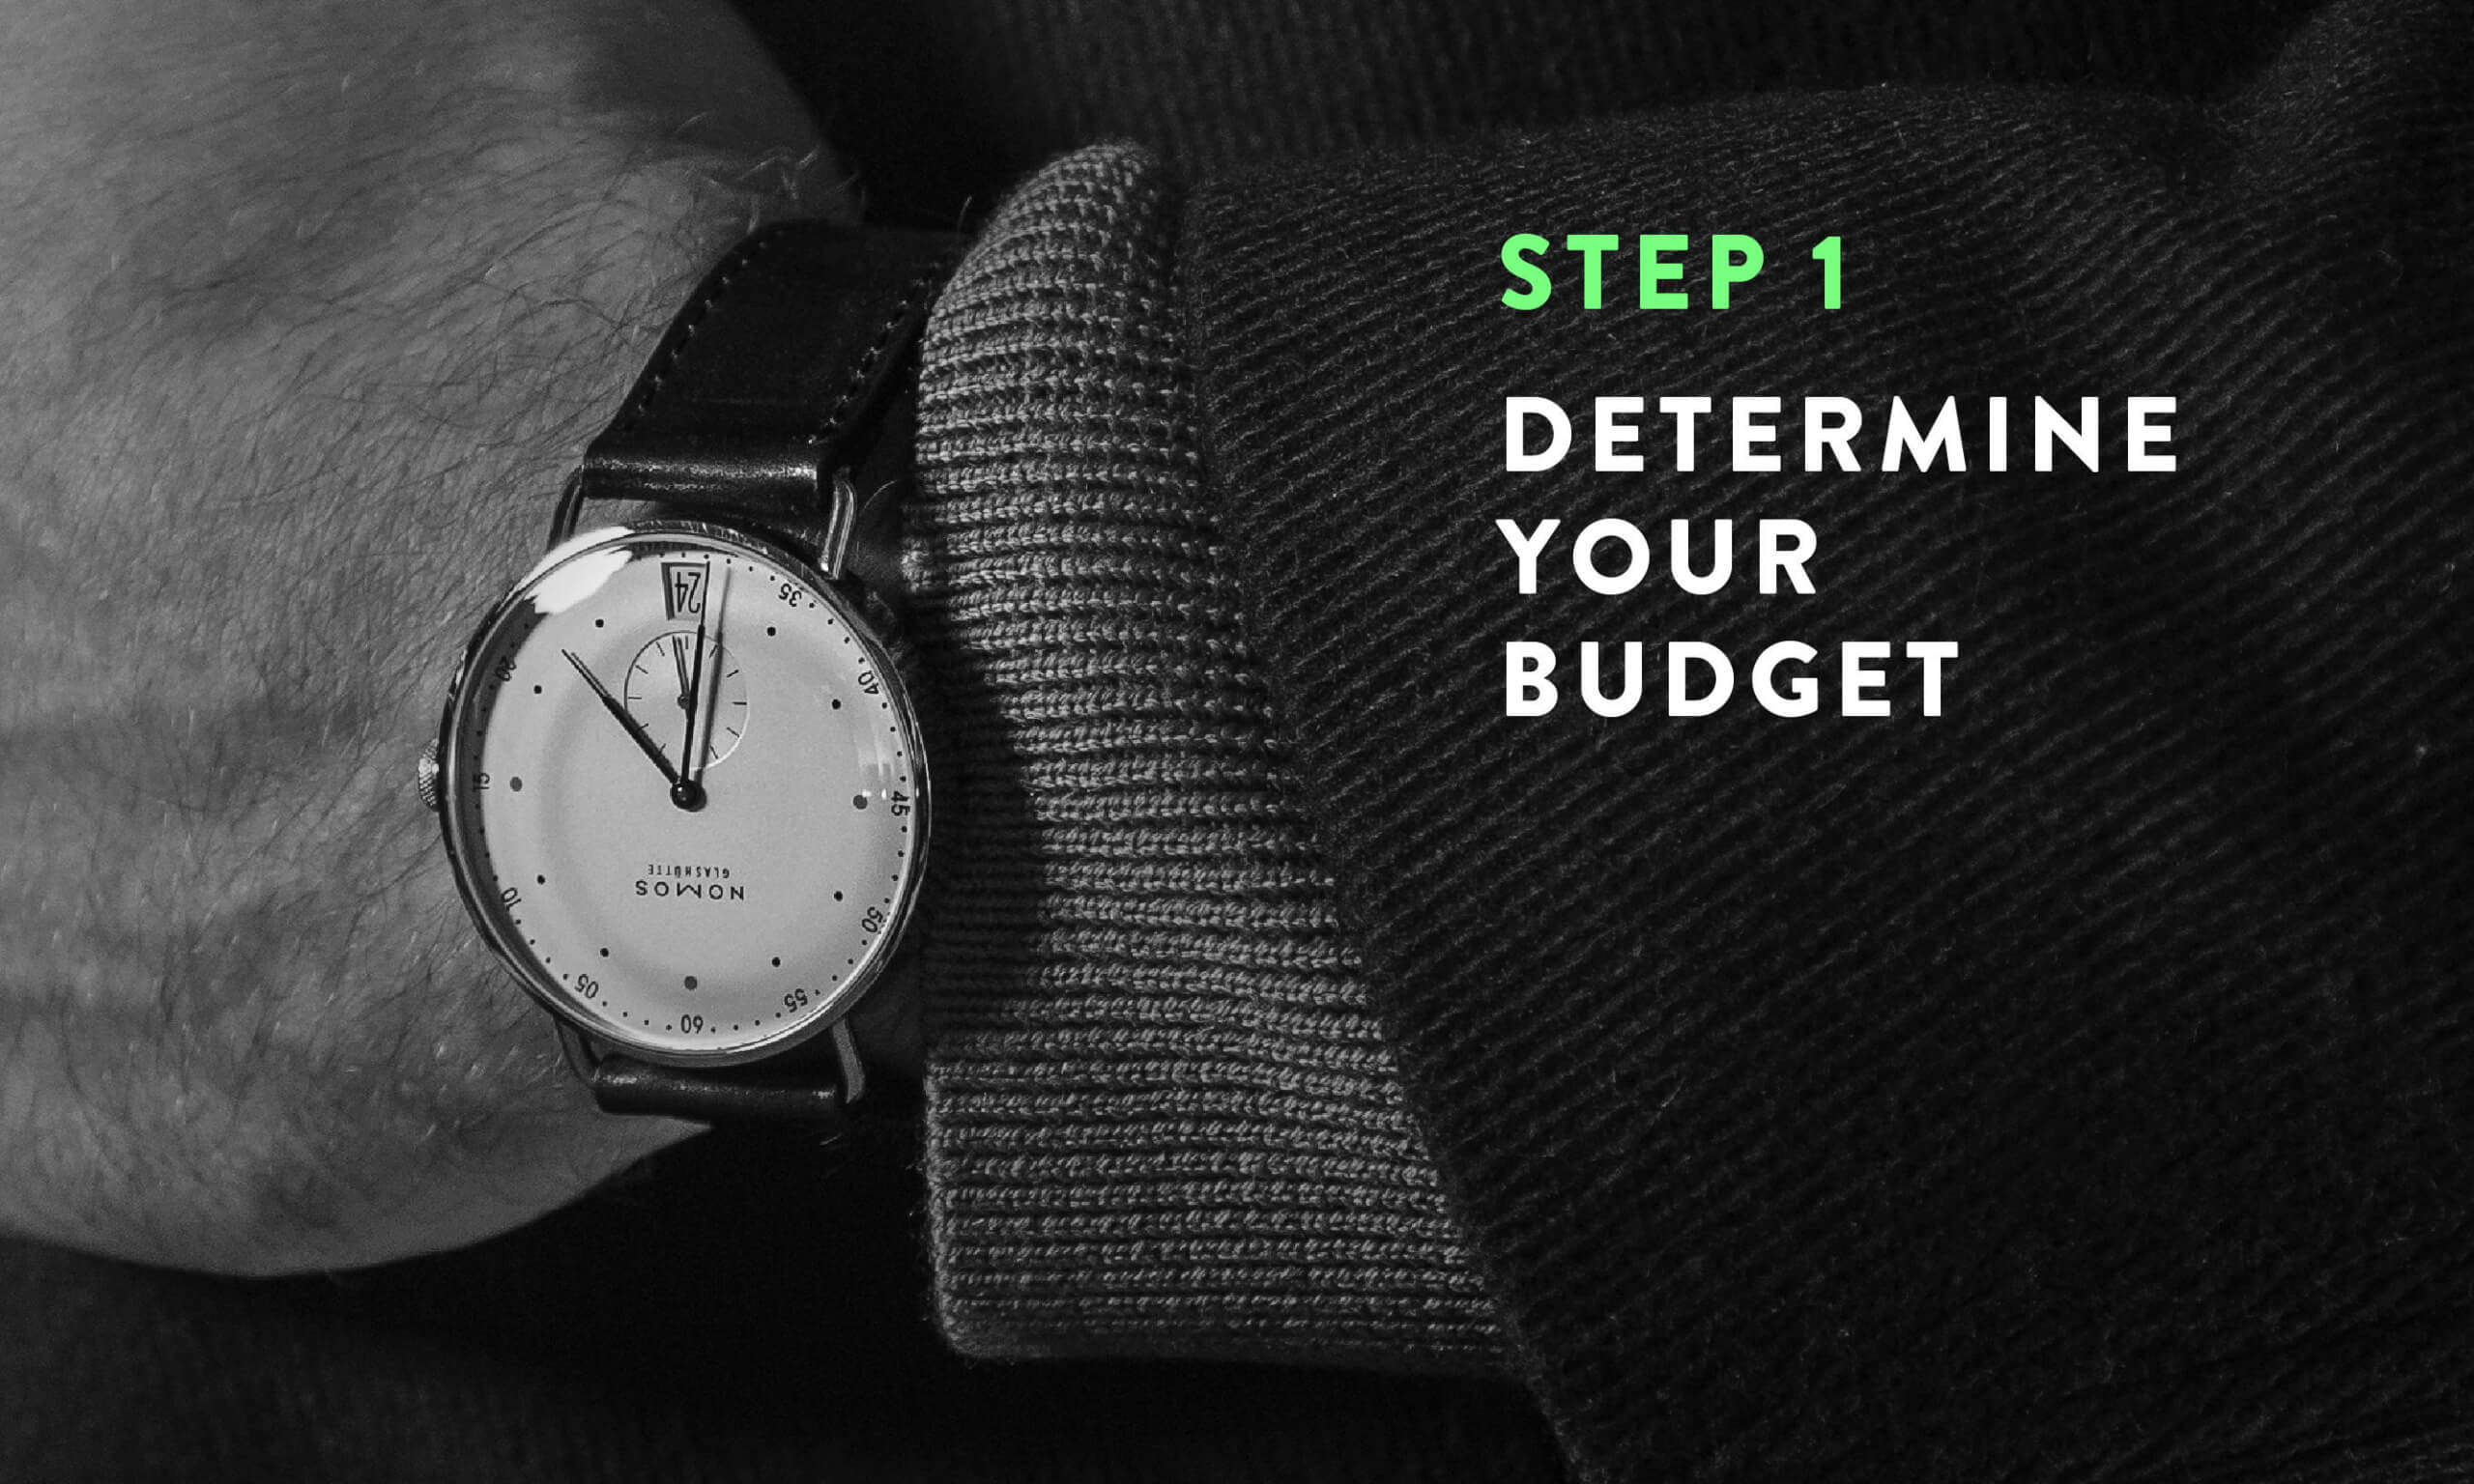 Determine your budget.